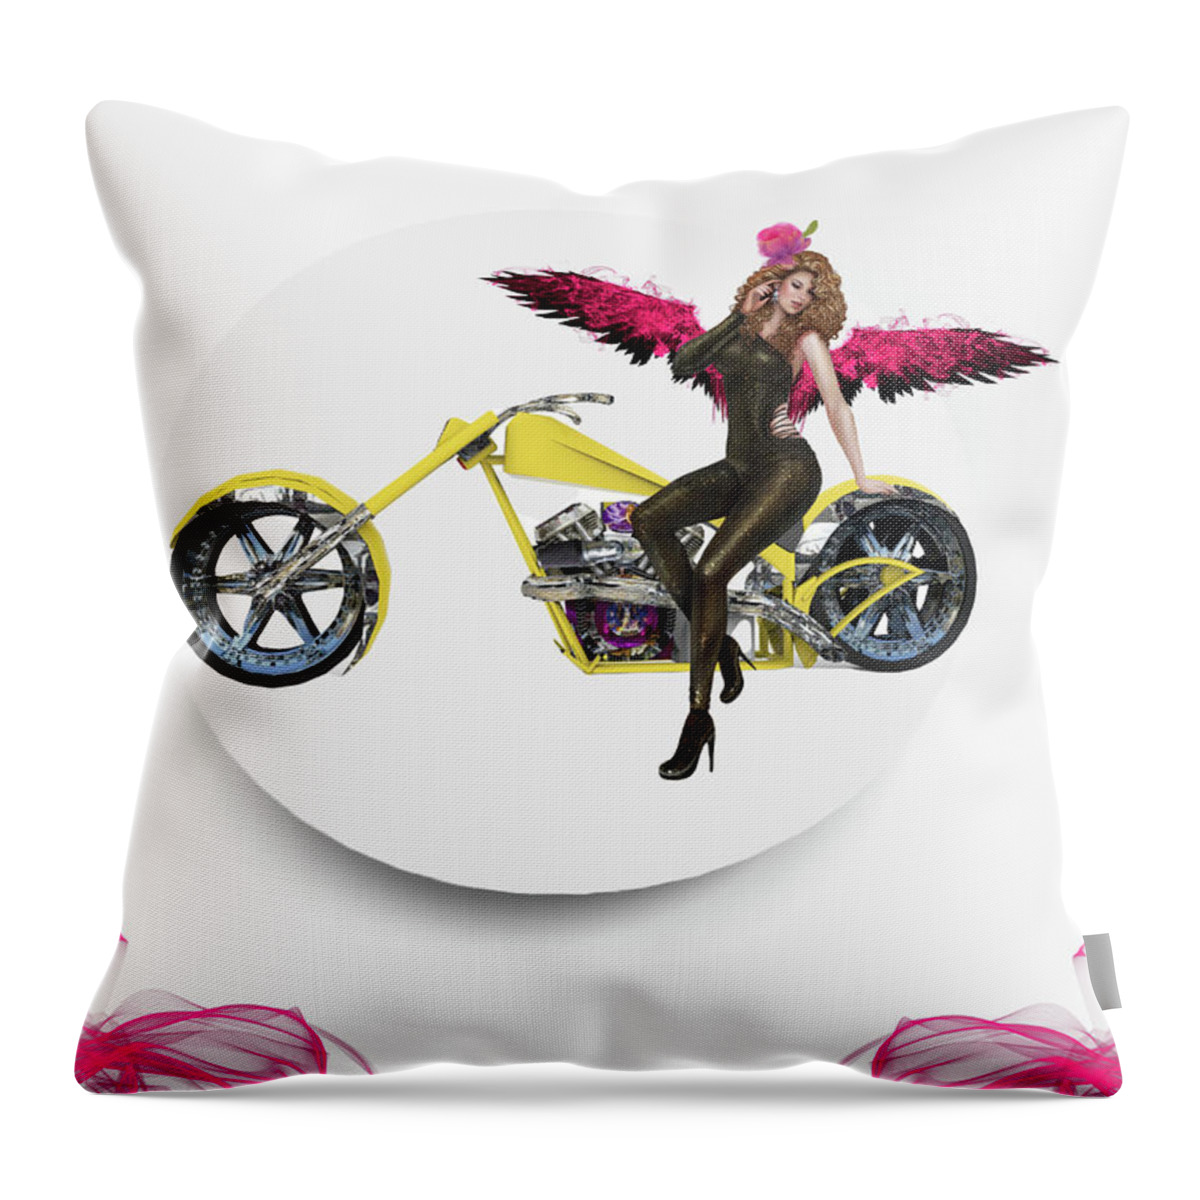 Art Throw Pillow featuring the digital art Angel Girl by Jean M Nelson